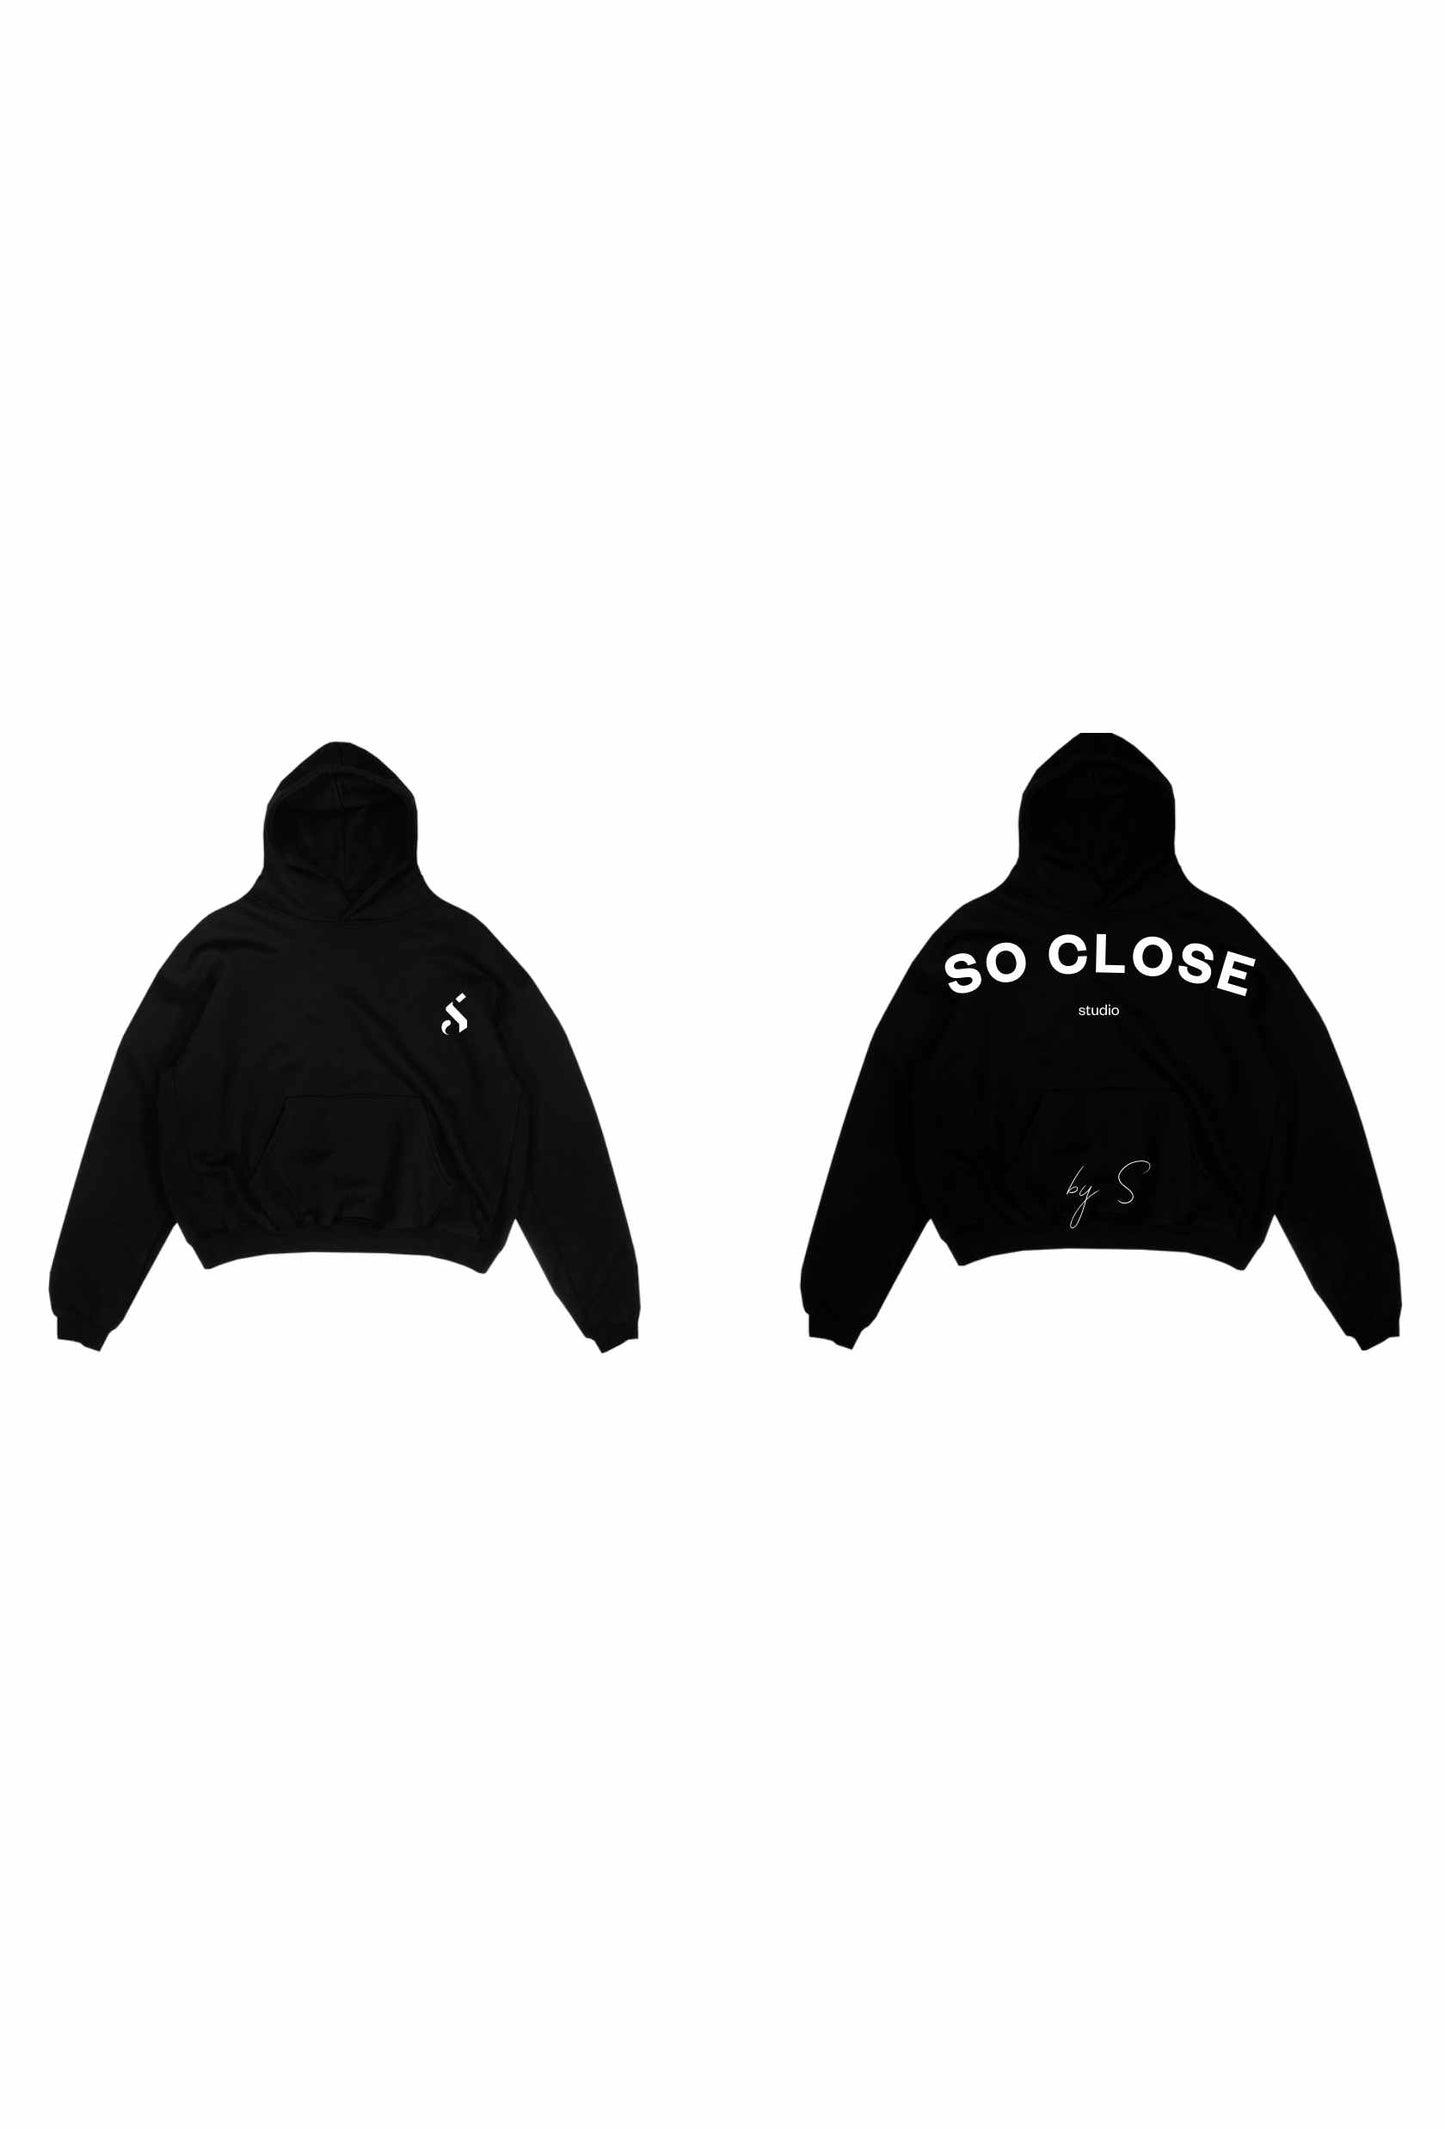 Heavyweight Black hoodie - So close "by S"